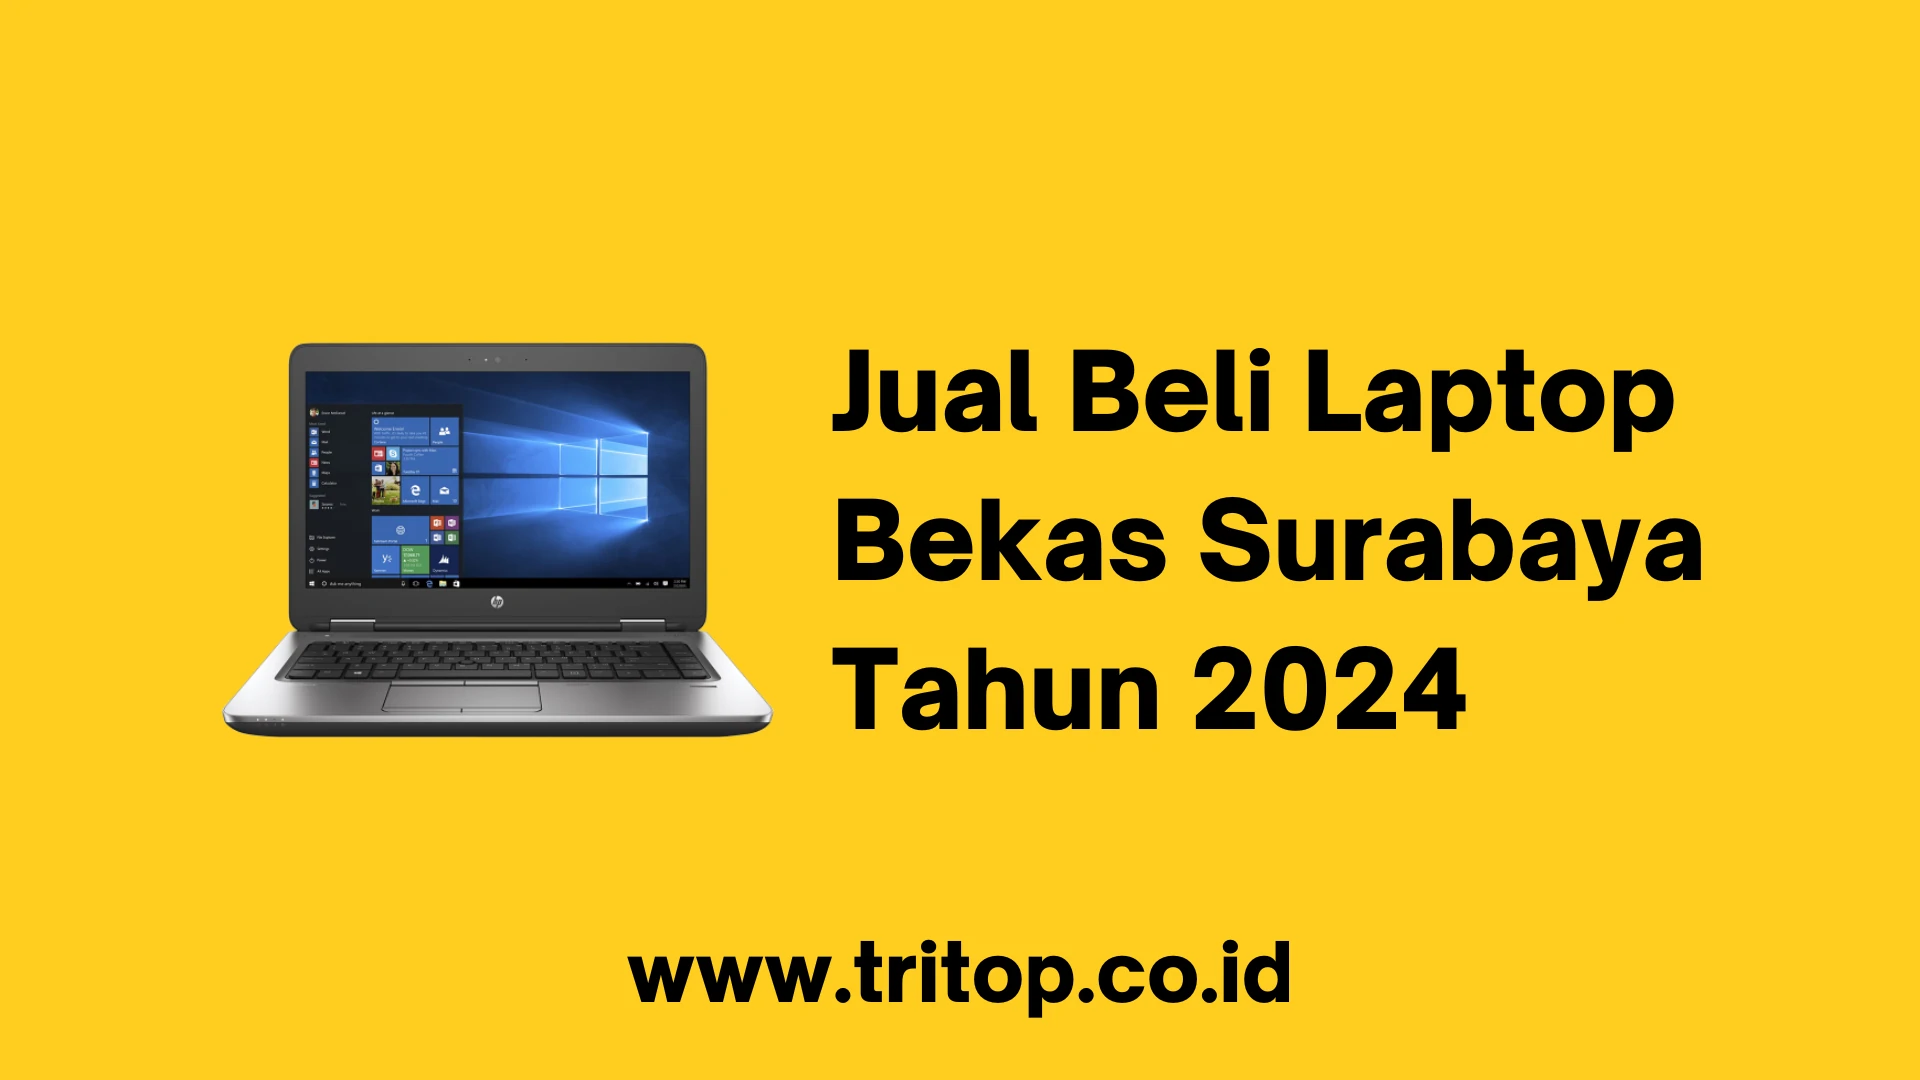 Jual Beli Laptop Bekas Surabaya 2024